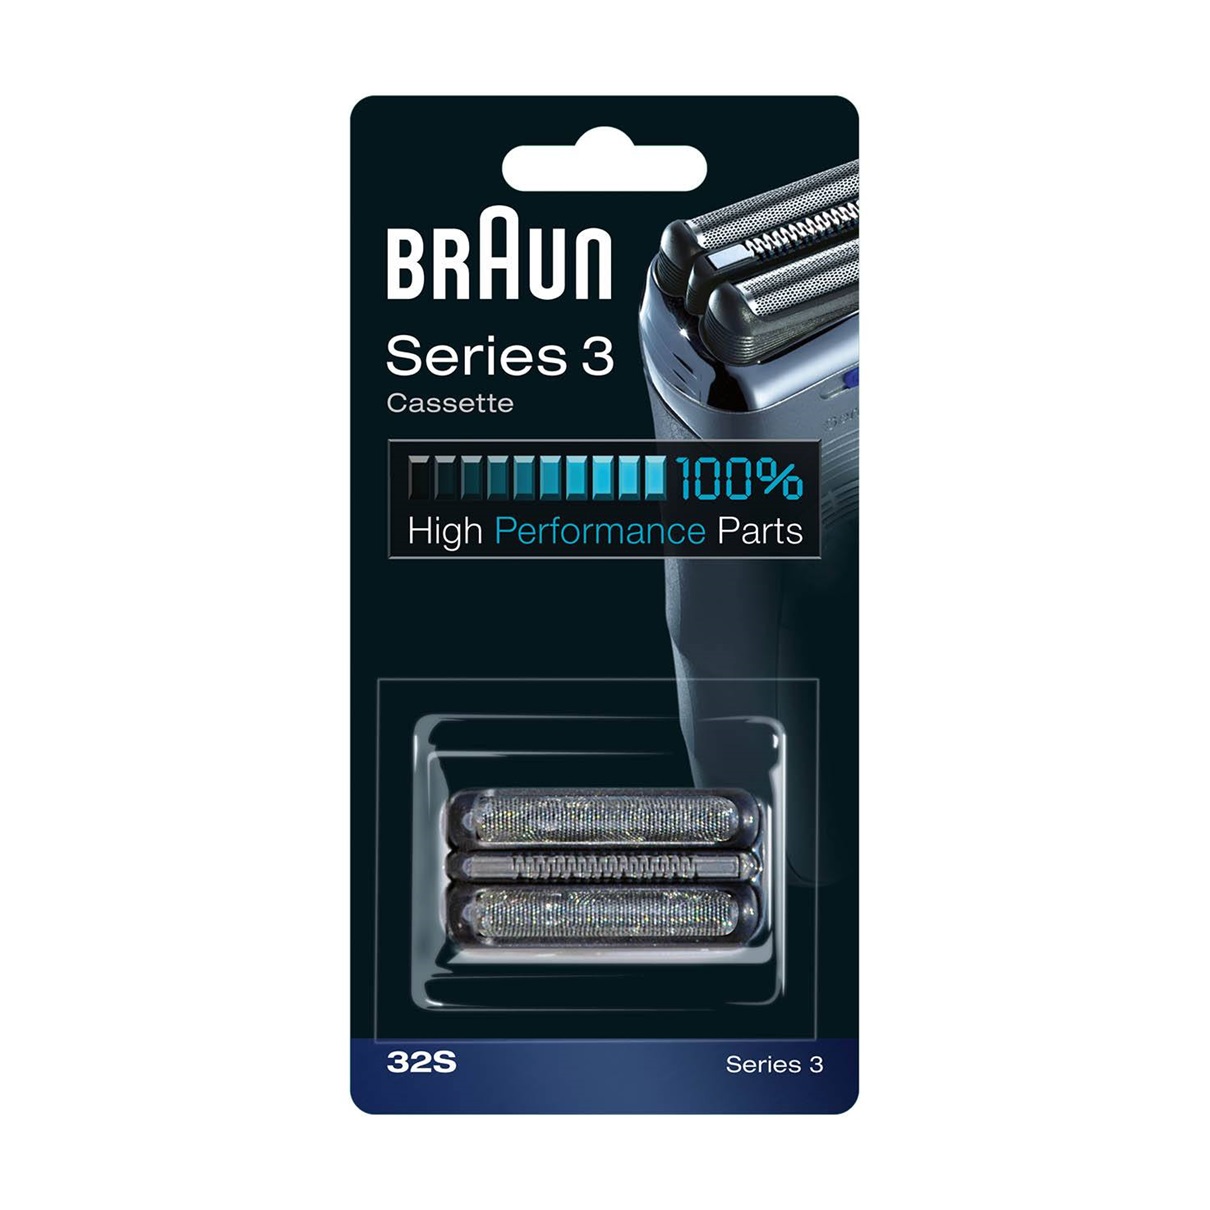 Сетка и режущий блок для бритв Braun 32S сетка и режущий блок cruser 20s 2000 series braun браун 65733762 81253250 81387934